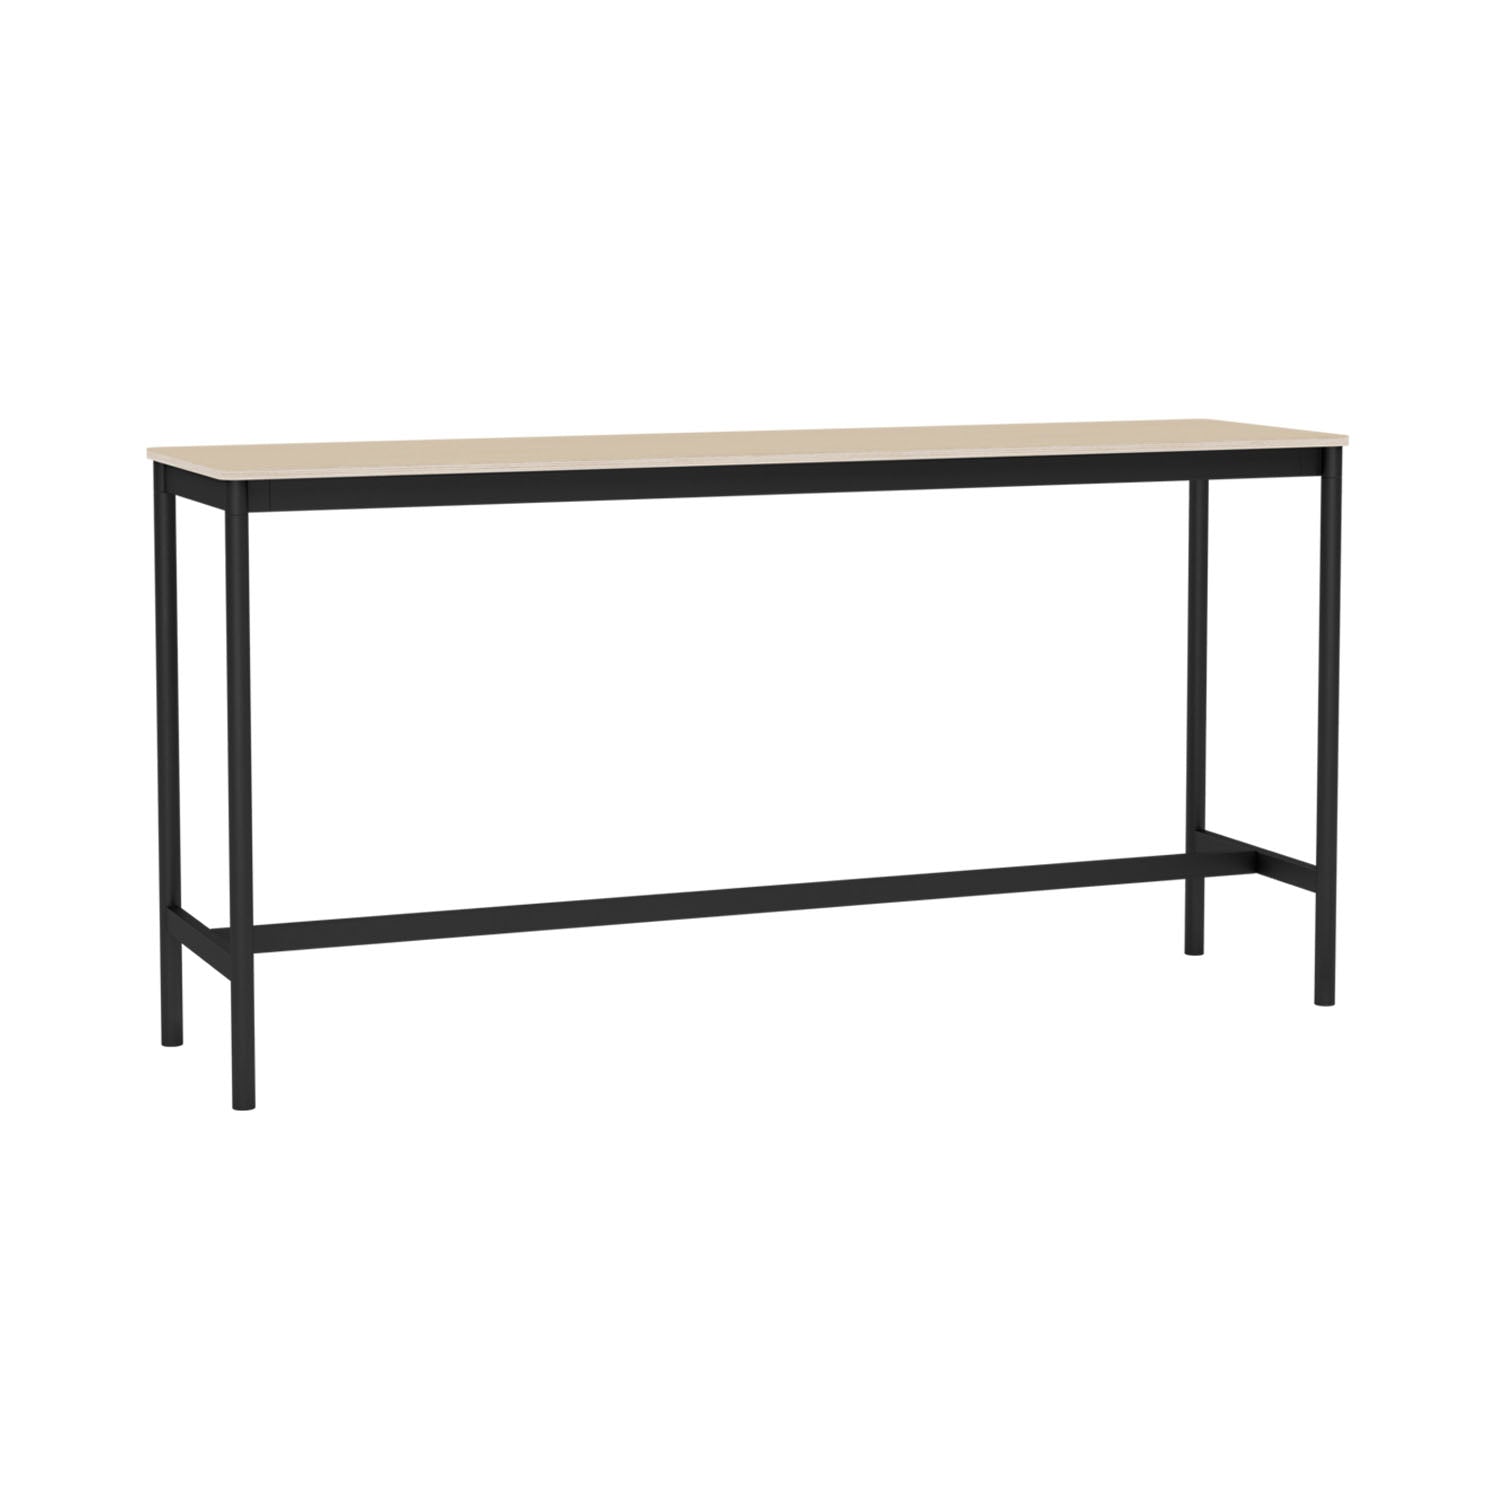 Base High Table: Oak Veneer + Plywood Edge + Black